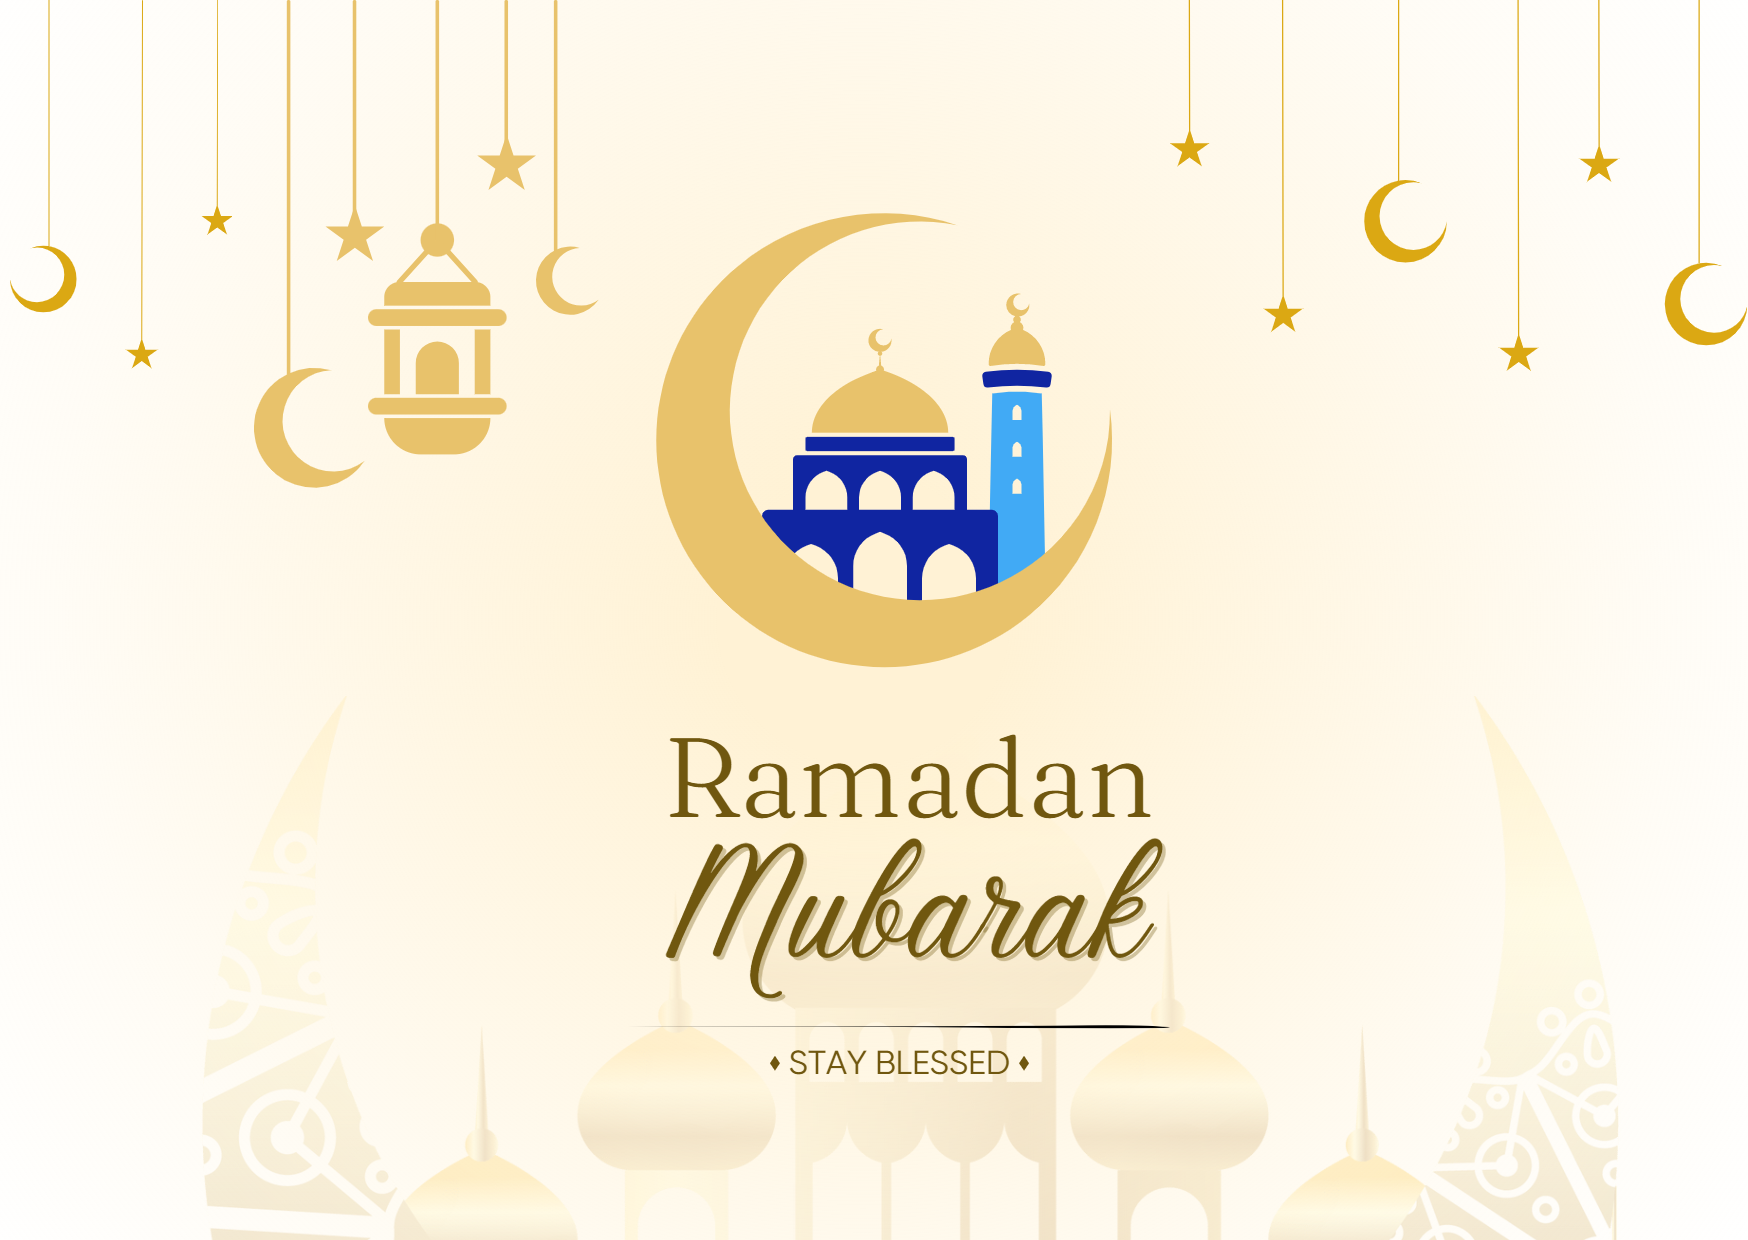 Ramadan Mubarak! - Information Systems Ltd